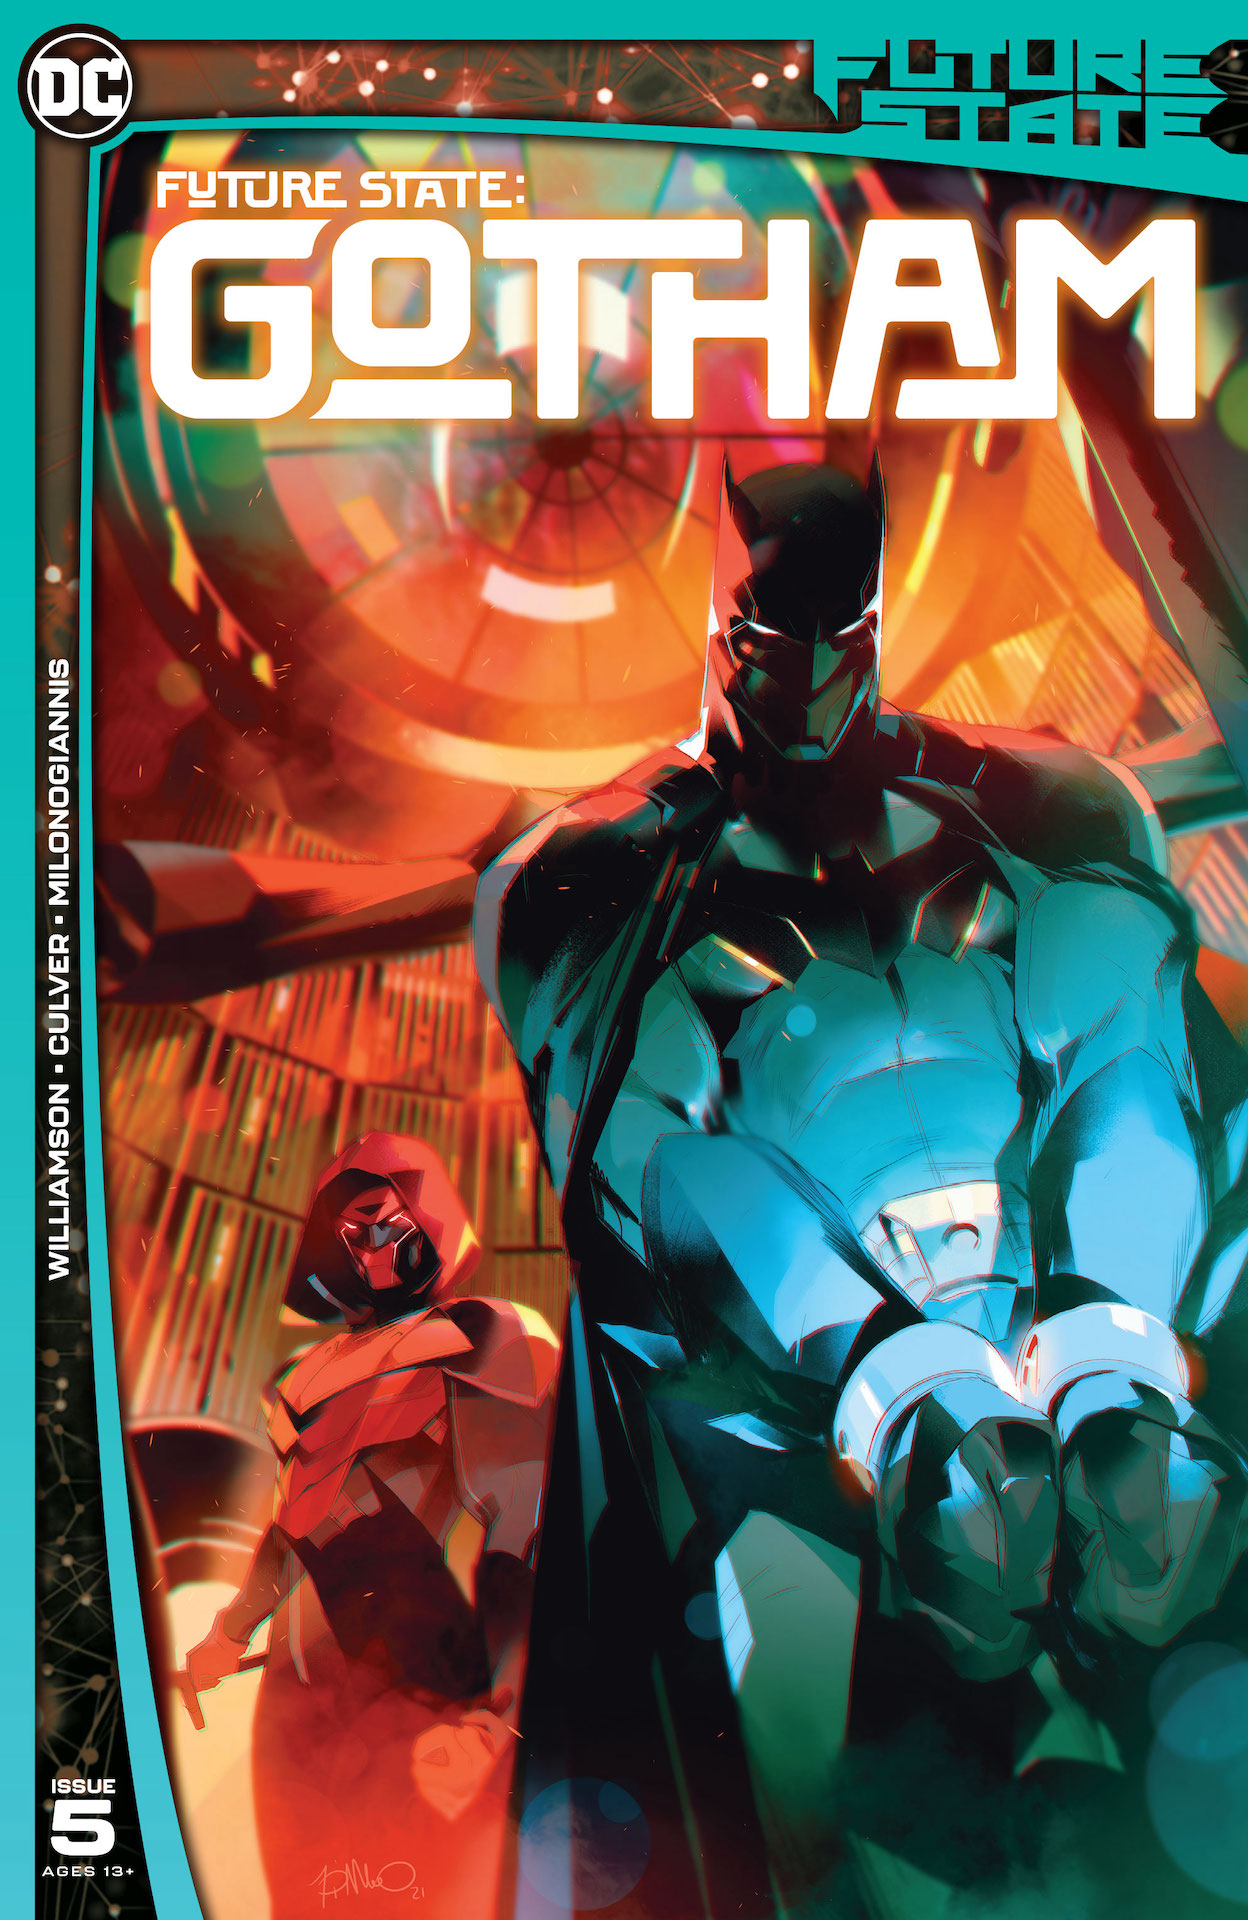 DC Preview: Future State #5: Gotham